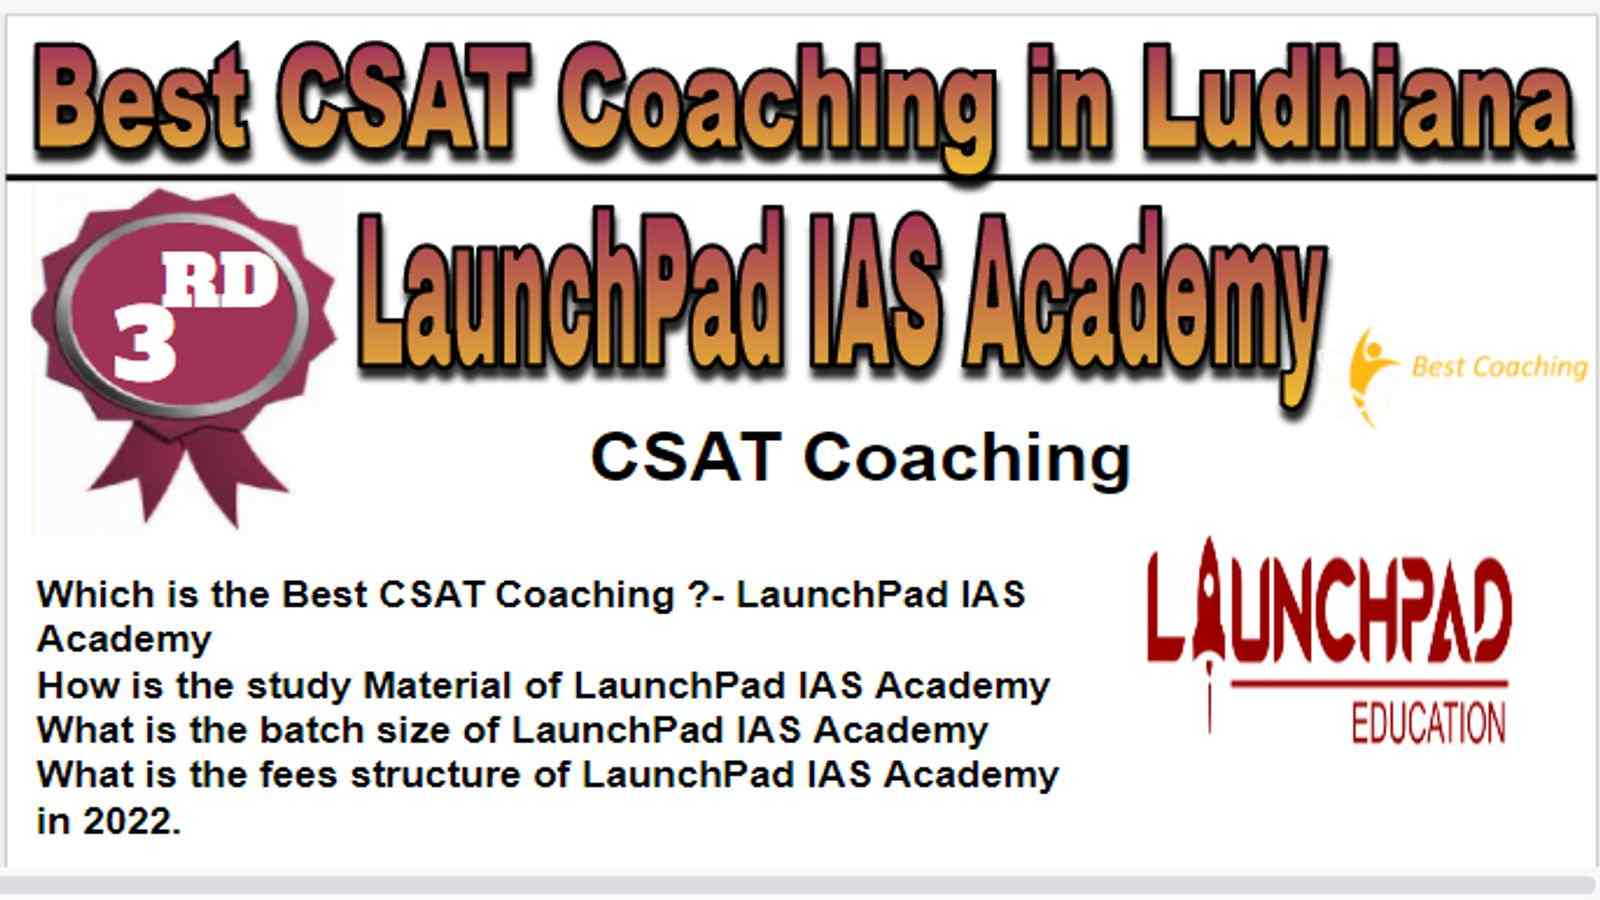 Rank 3 Best CSAT Coaching in Ludhiana